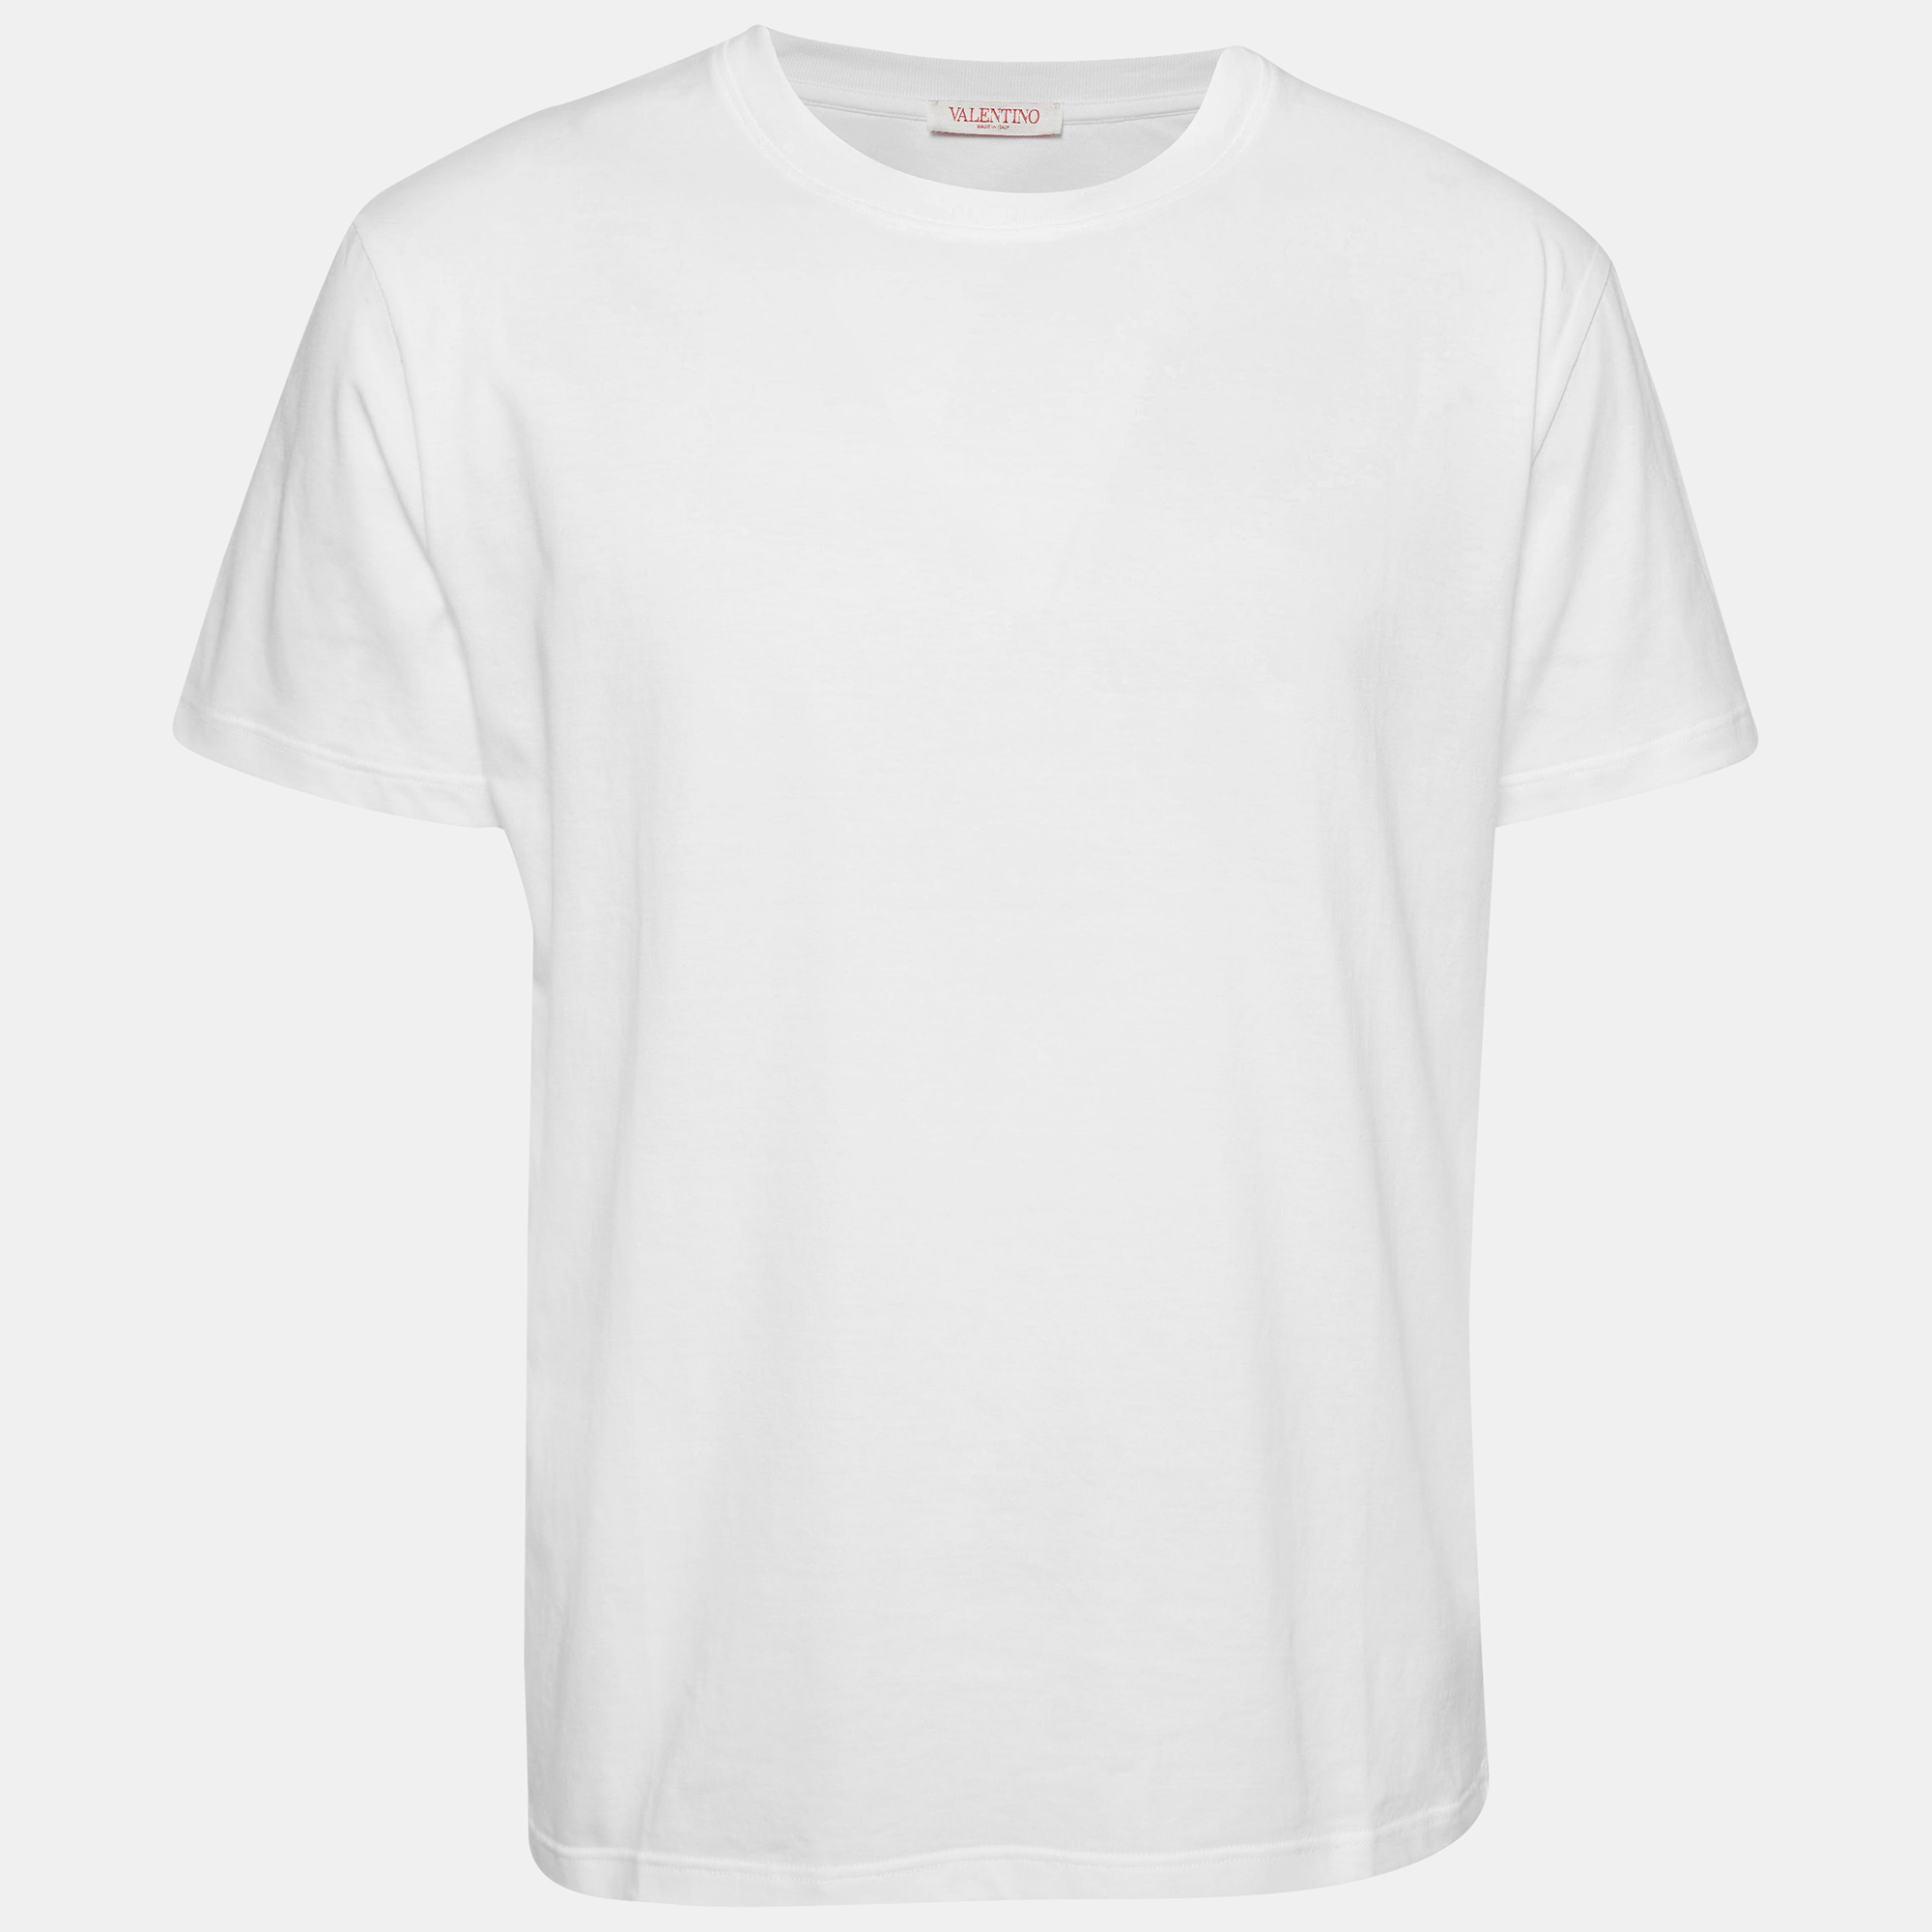 Valentino white cotton jersey t-shirt l